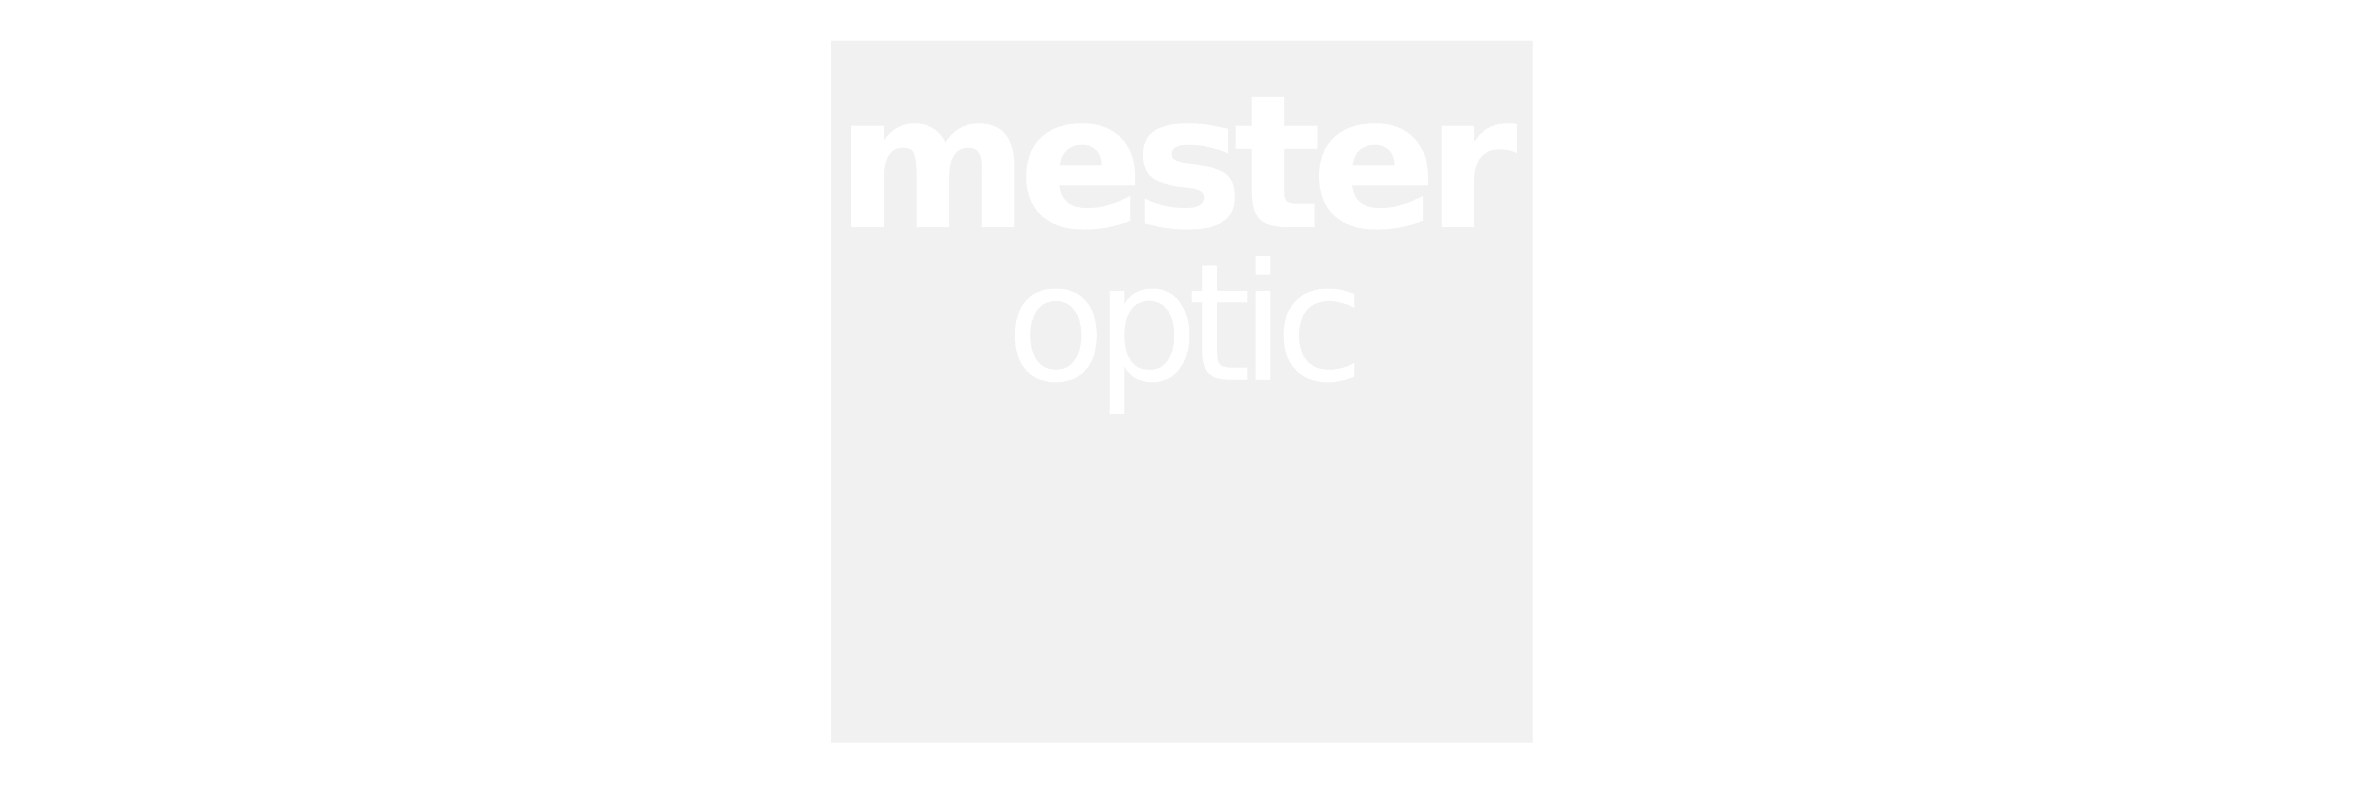 mester optic Logo